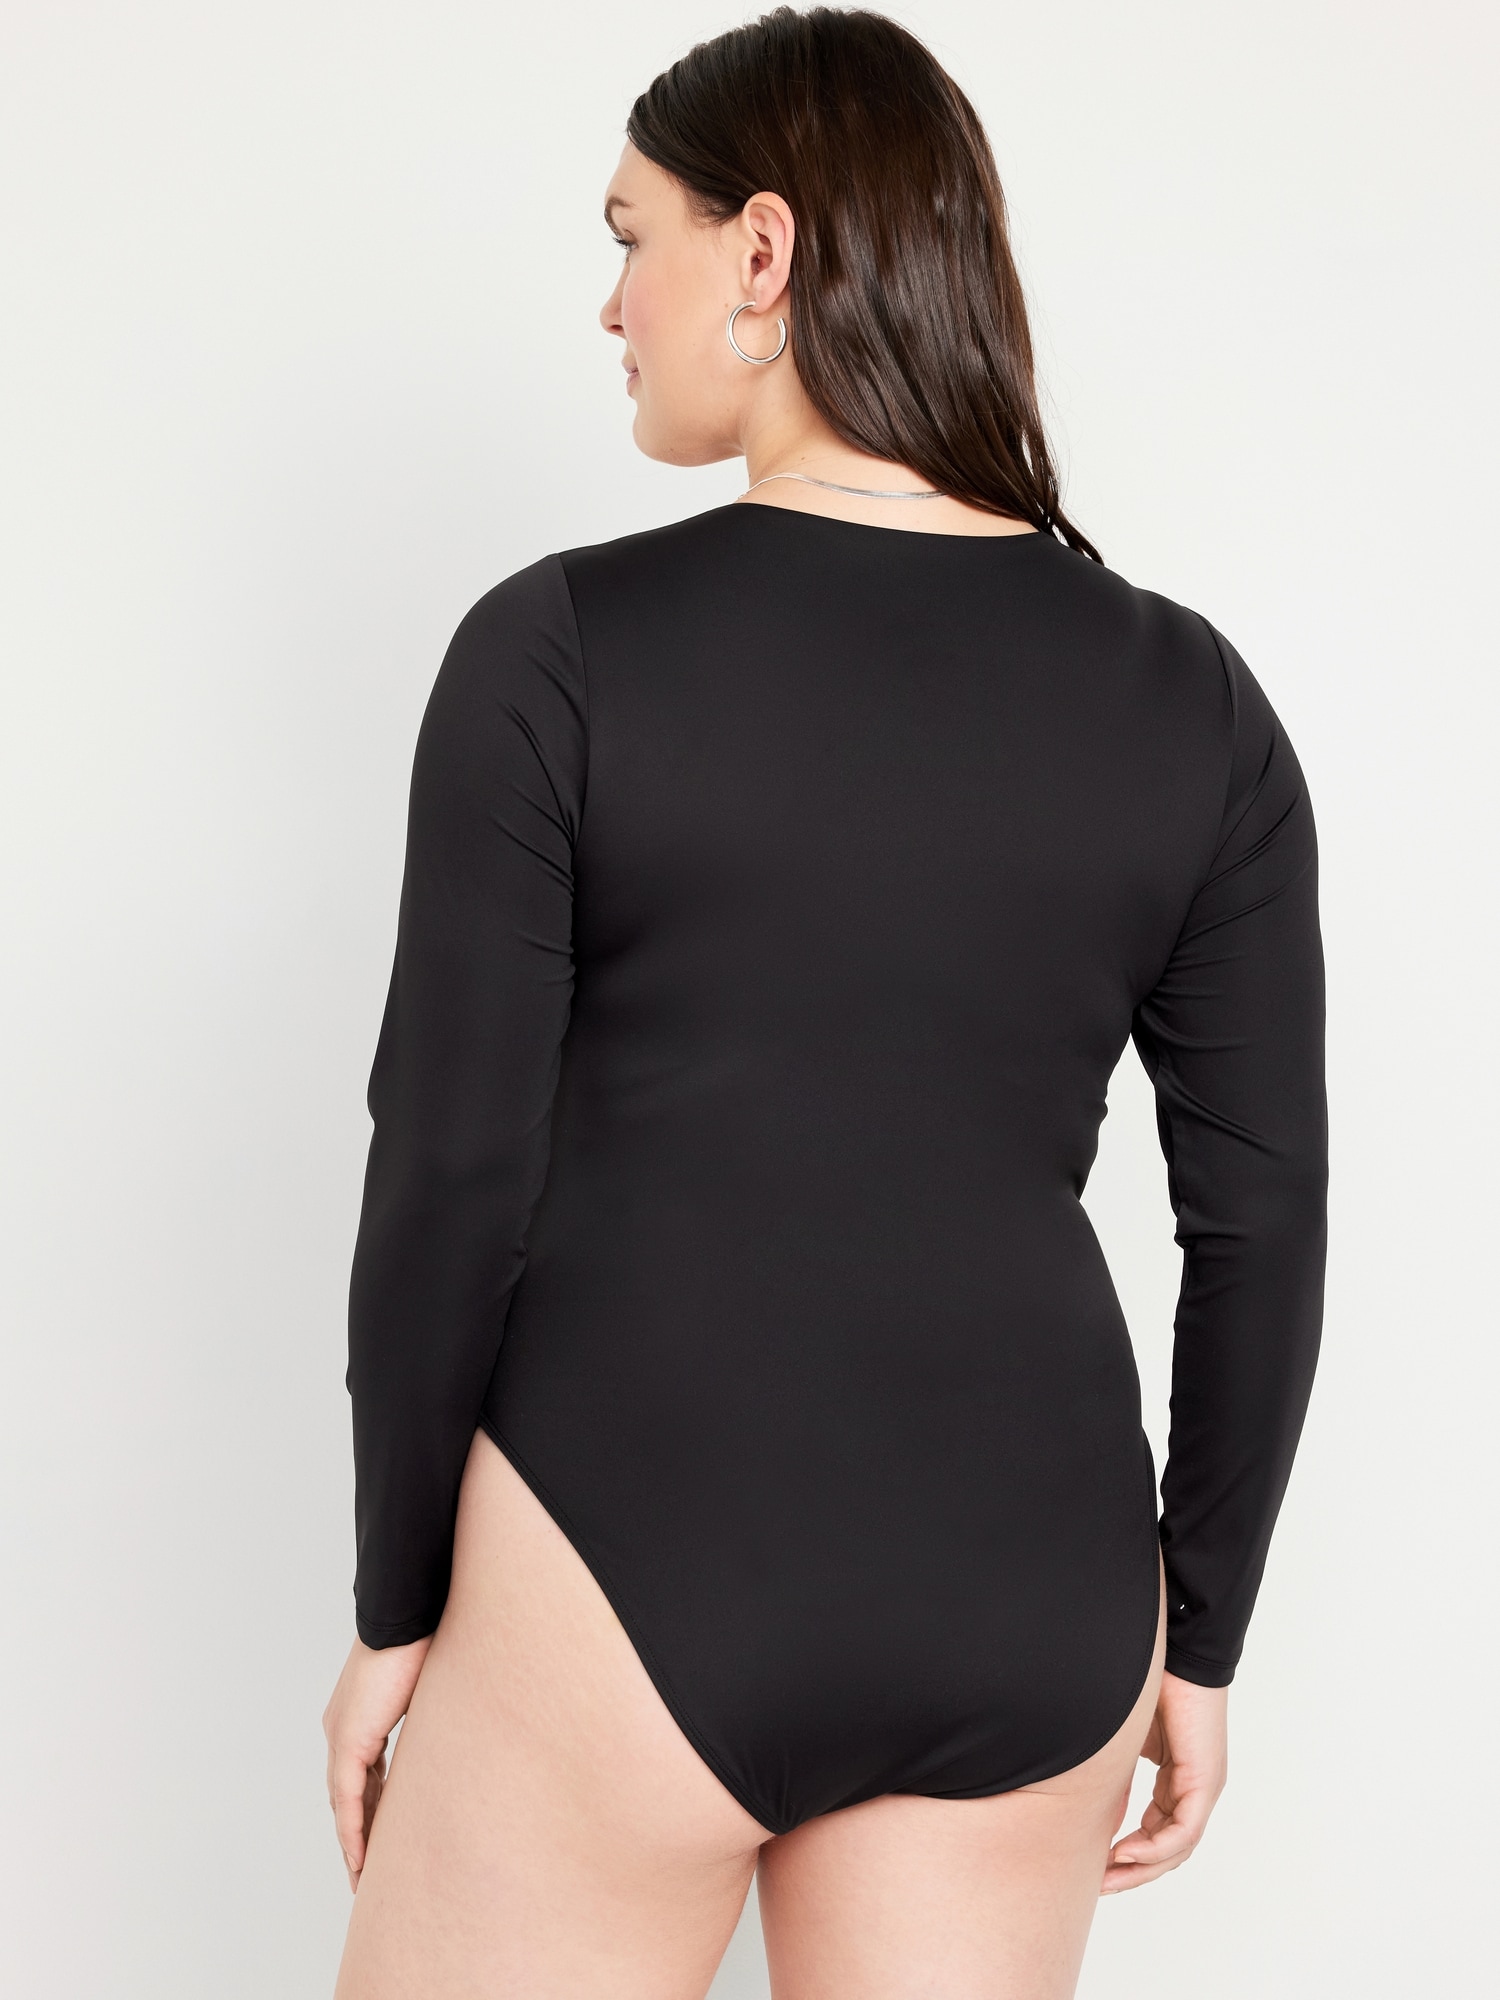 Long-Sleeve Double-Layer Sculpting Bodysuit for Women